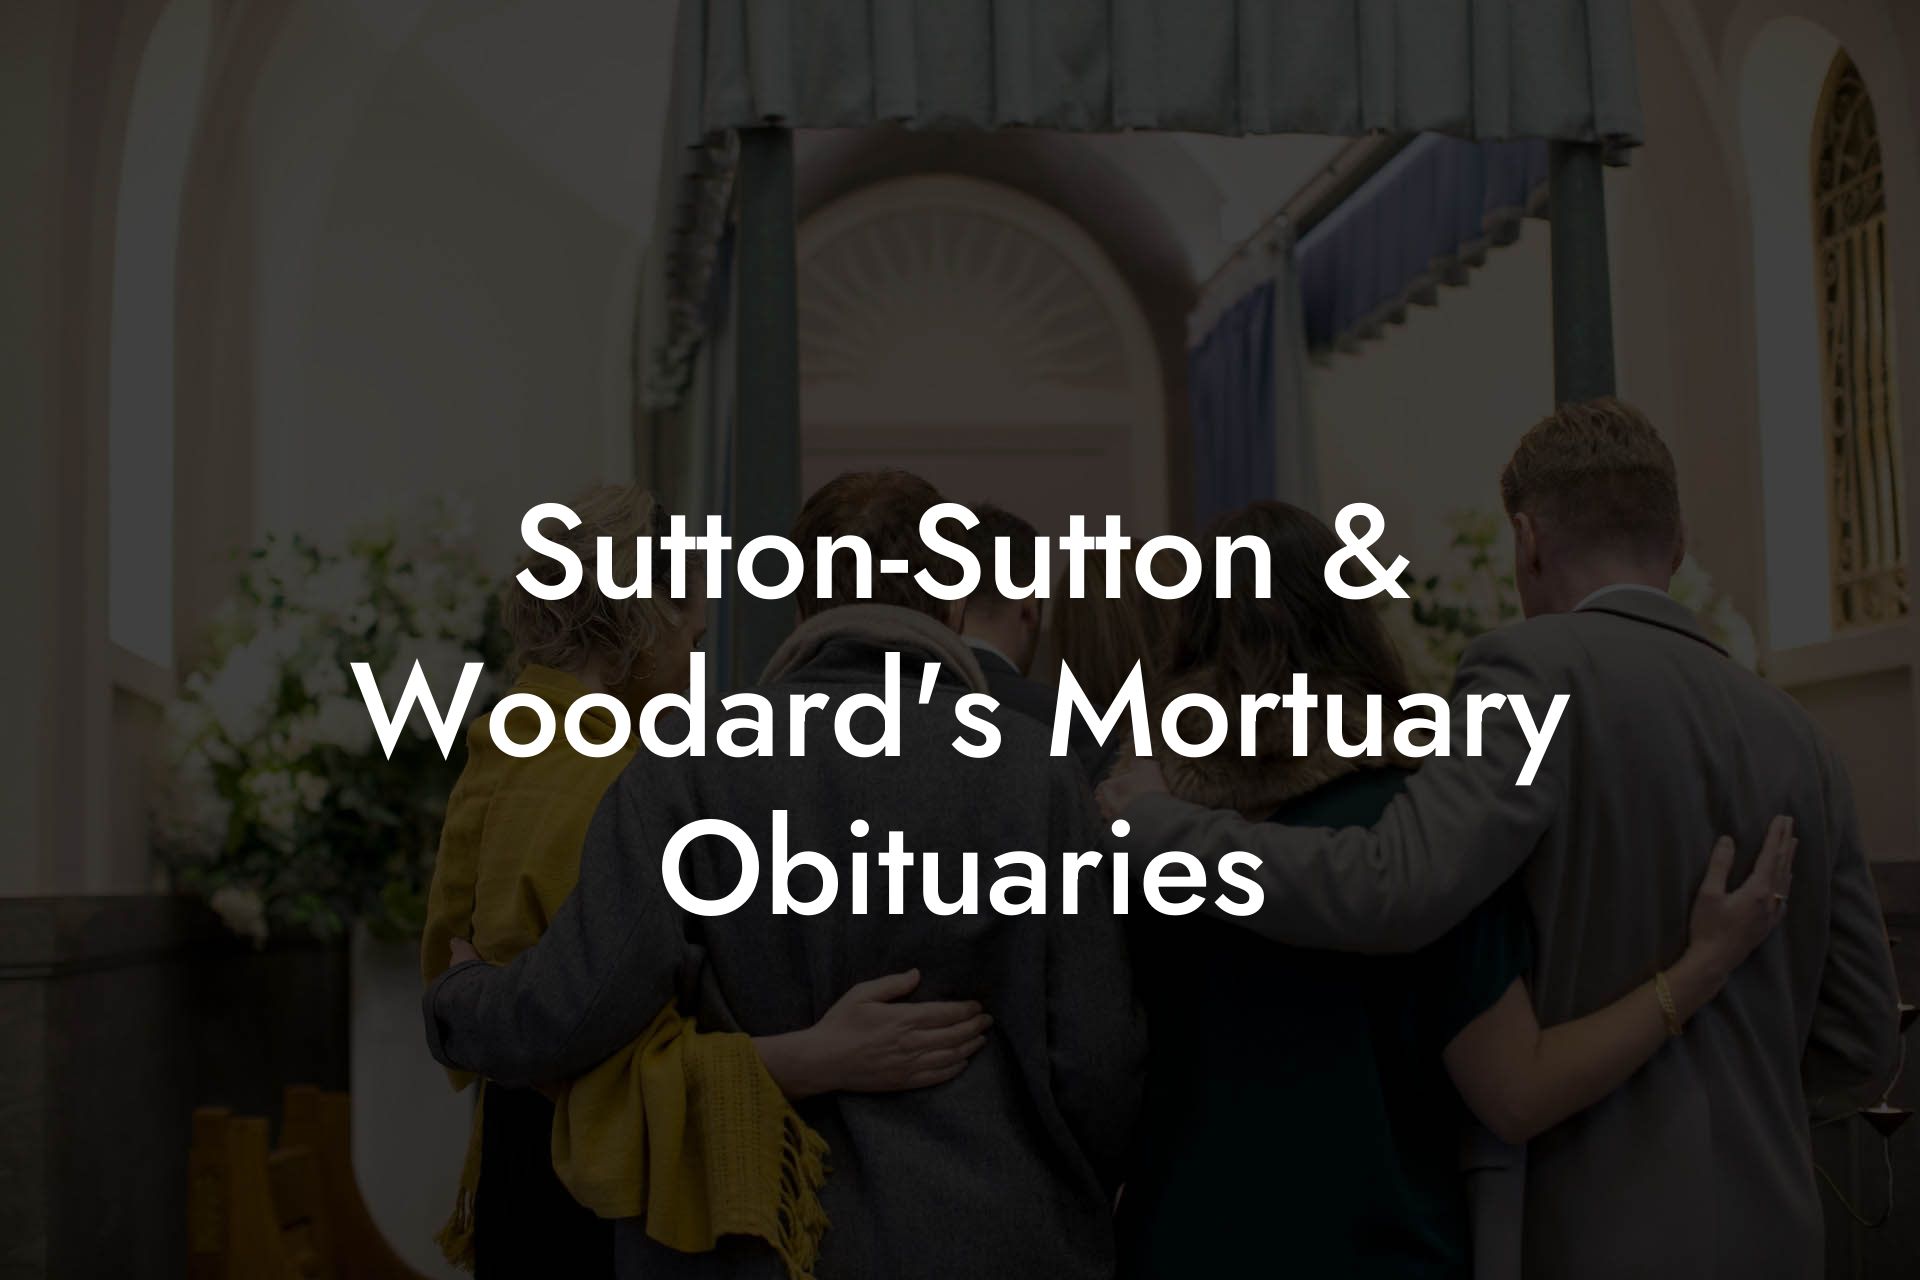 Sutton-Sutton & Woodard's Mortuary Obituaries